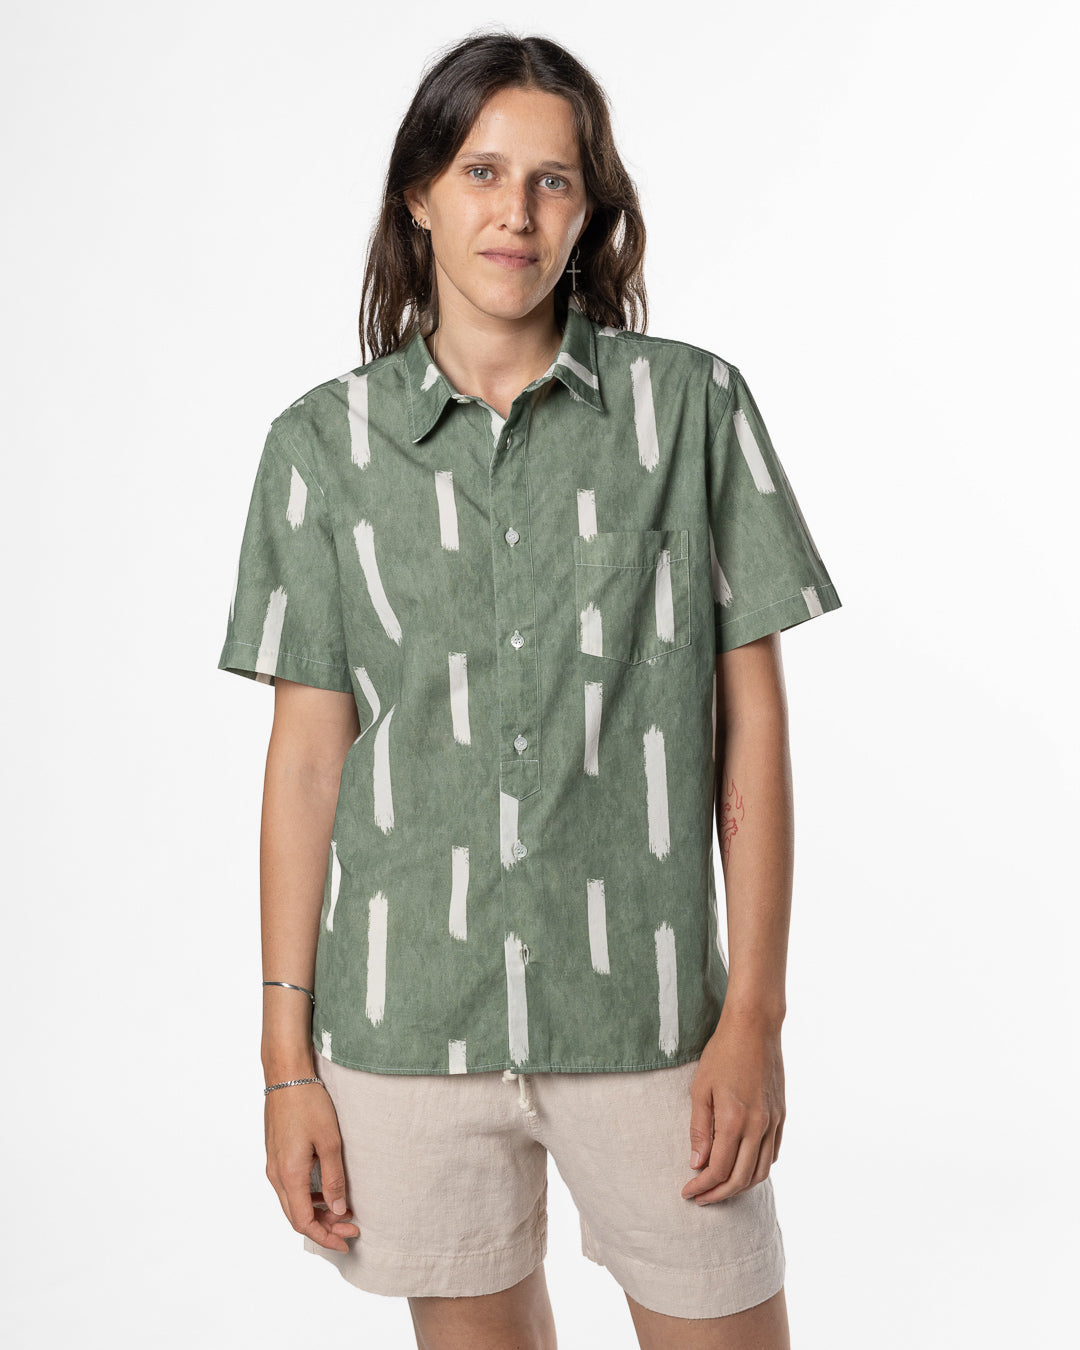 Alegre Printed Shirt - Bush Green Bay